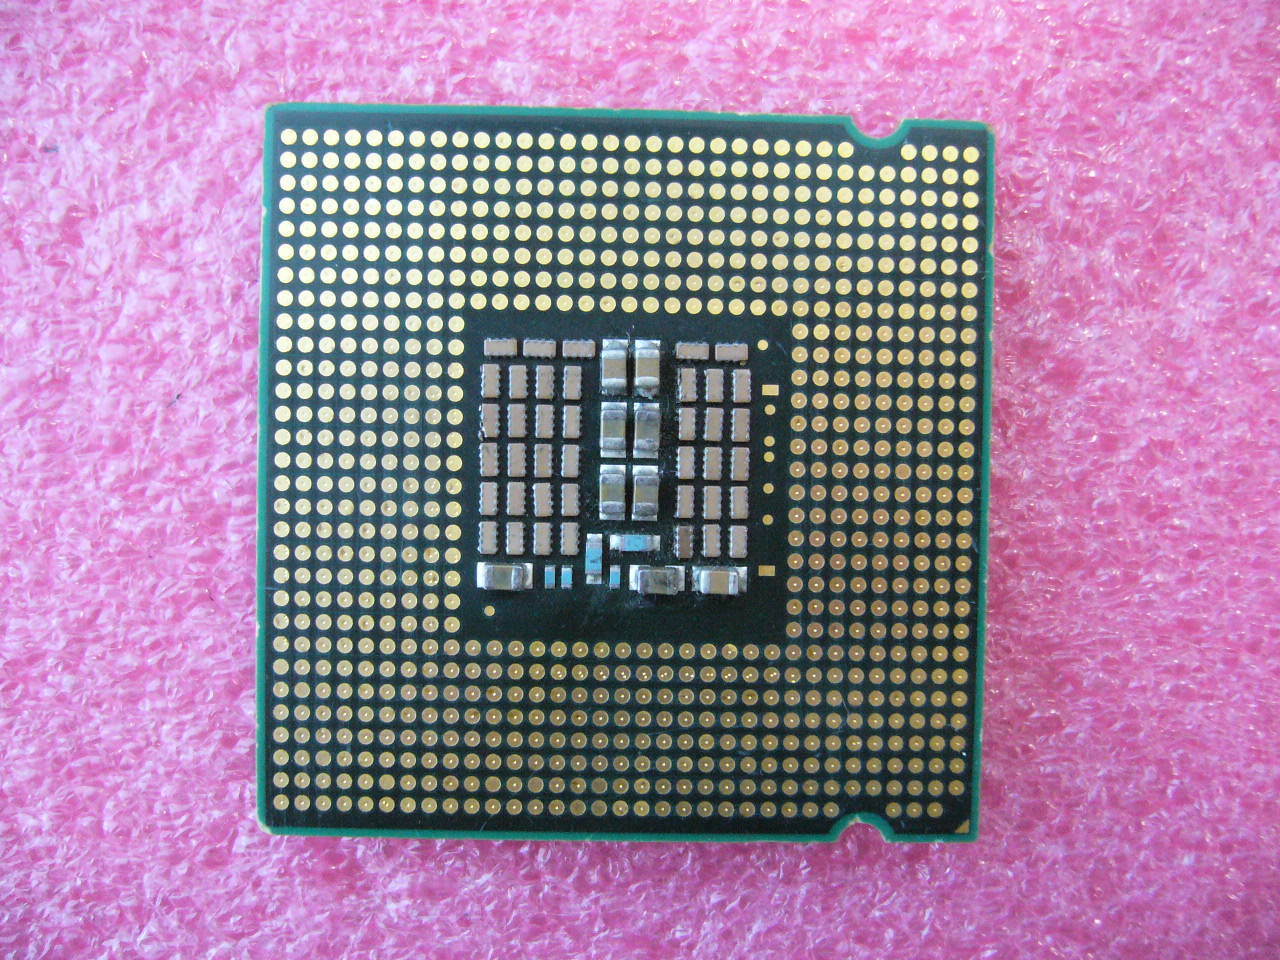 QTY 1x INTEL Quad Cores Q9550 CPU 2.83GHz/12MB/1333Mhz LGA775 SLB8V SLAWQ - Click Image to Close